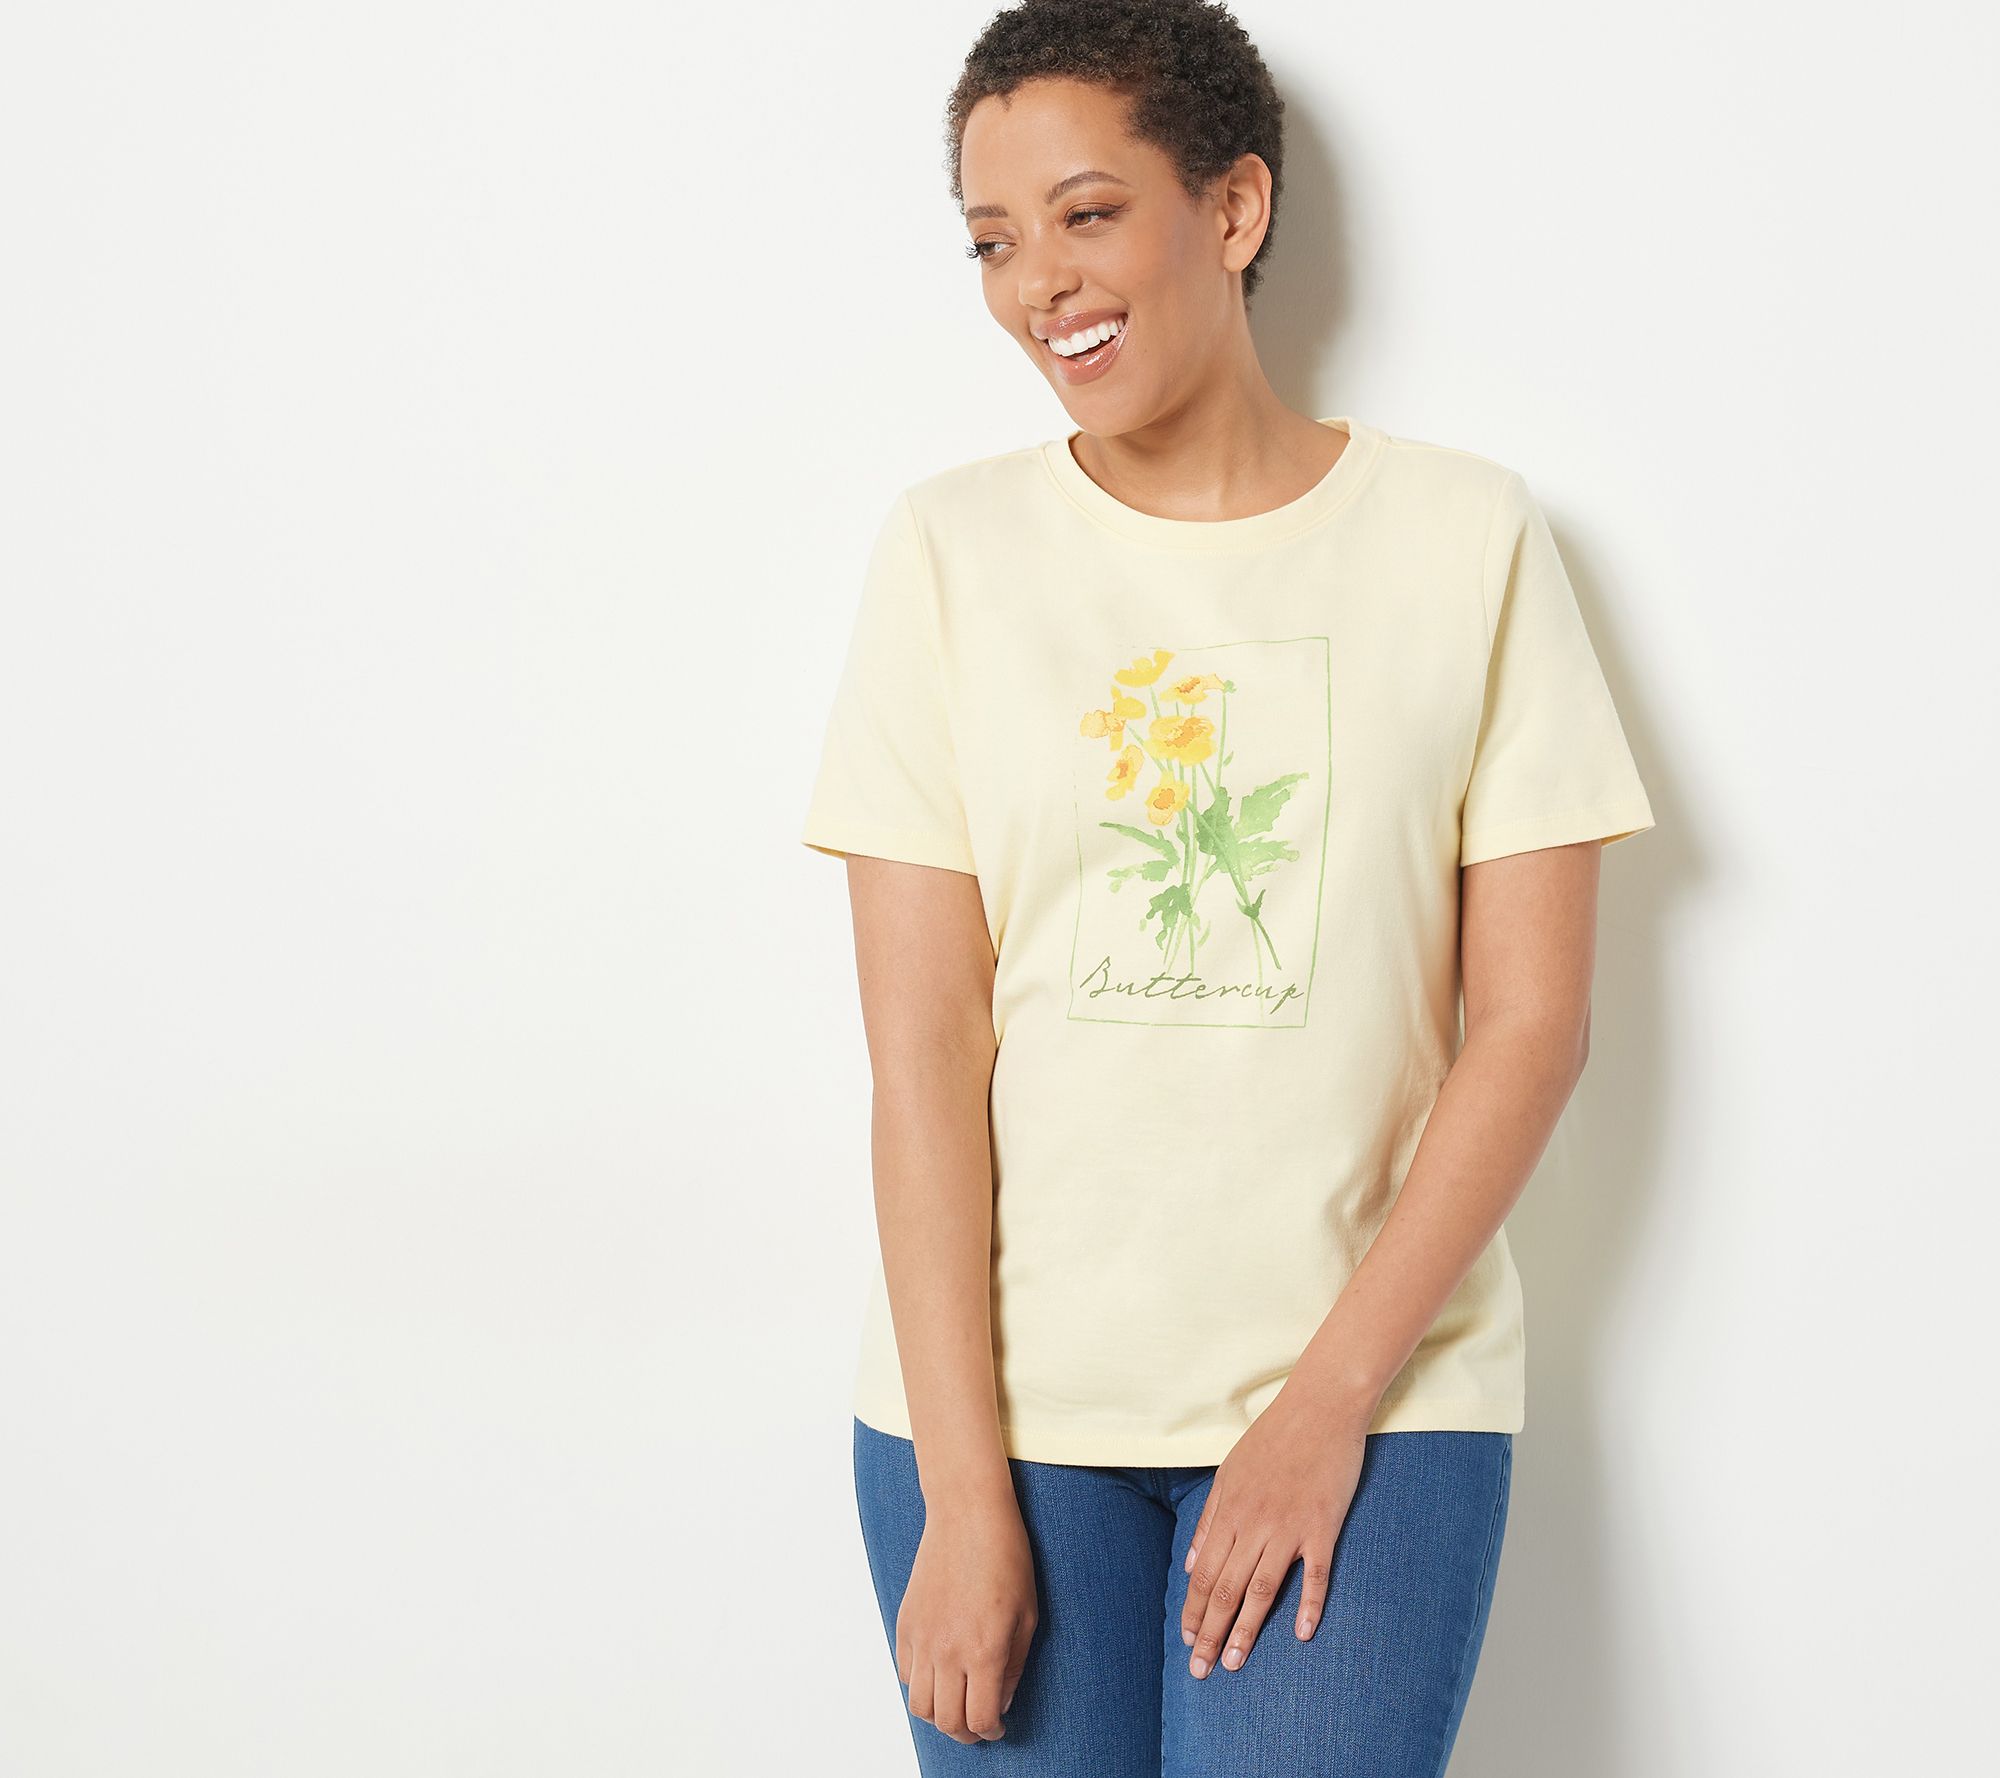 Doe! Target Brand Flower Plant Shirt Size 1X New Nwt